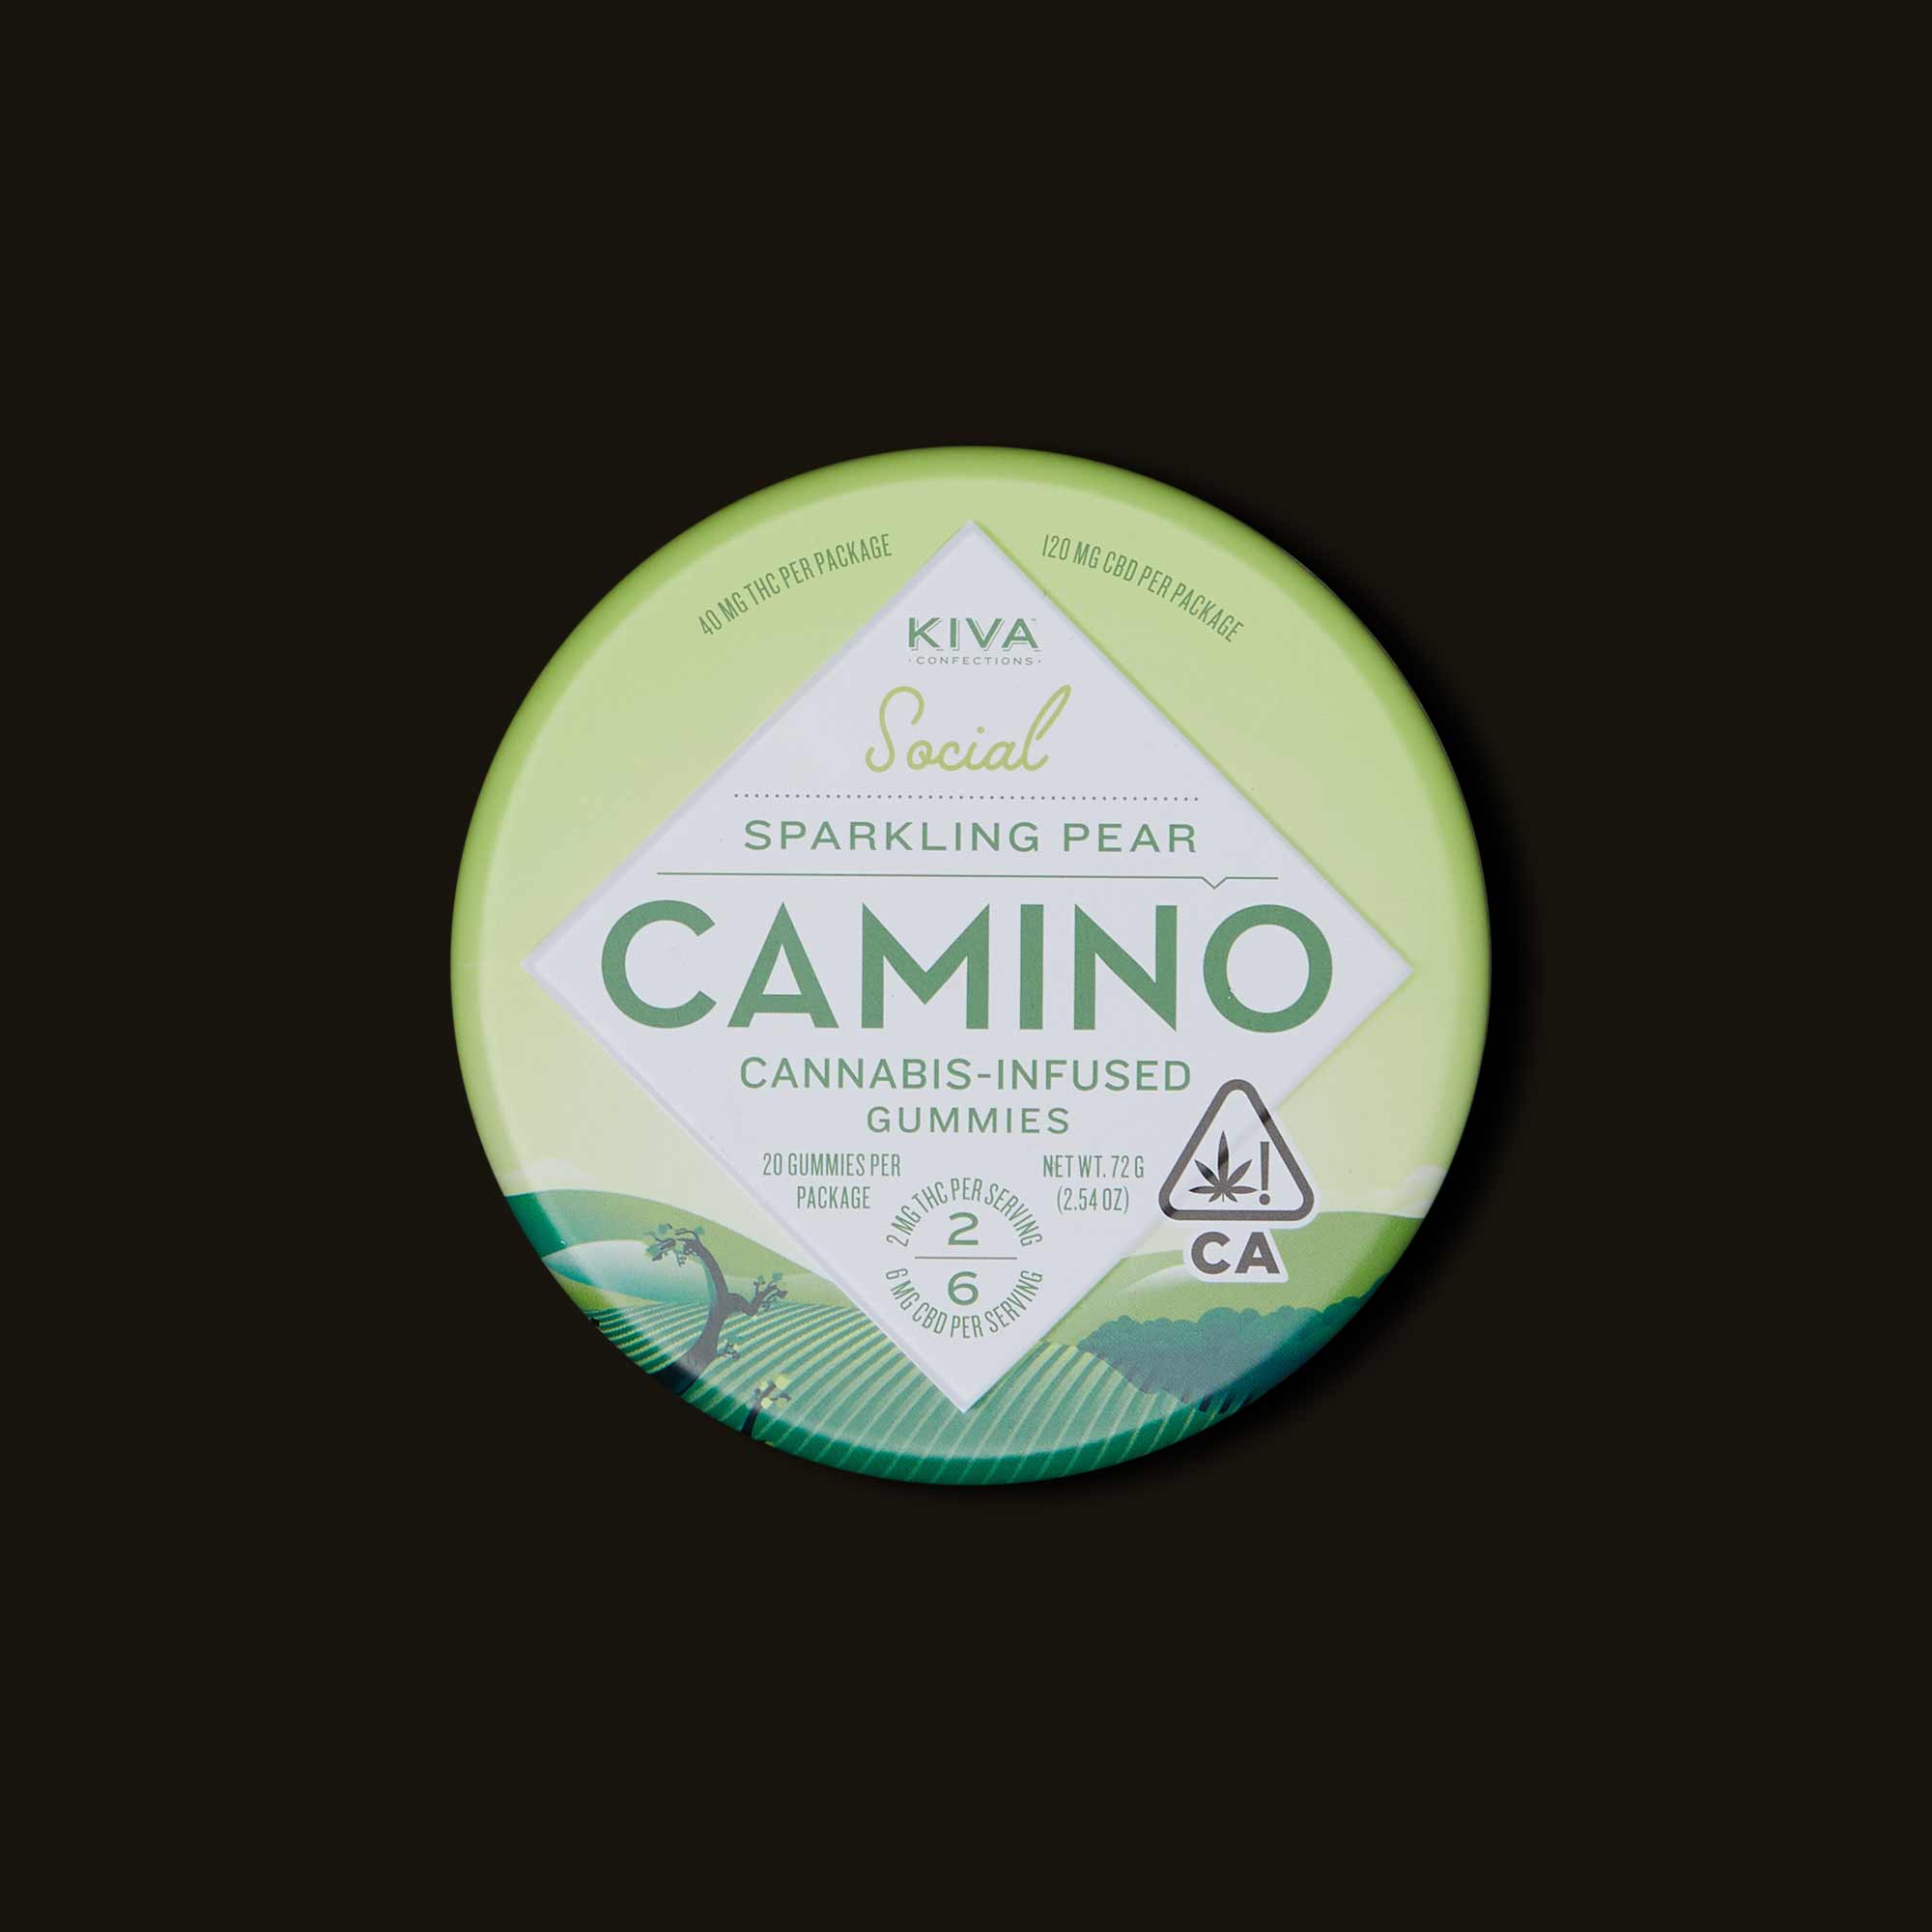 Kiva-Sparkling-Pear-Camino-Gummies-Front-CA-1699-793434